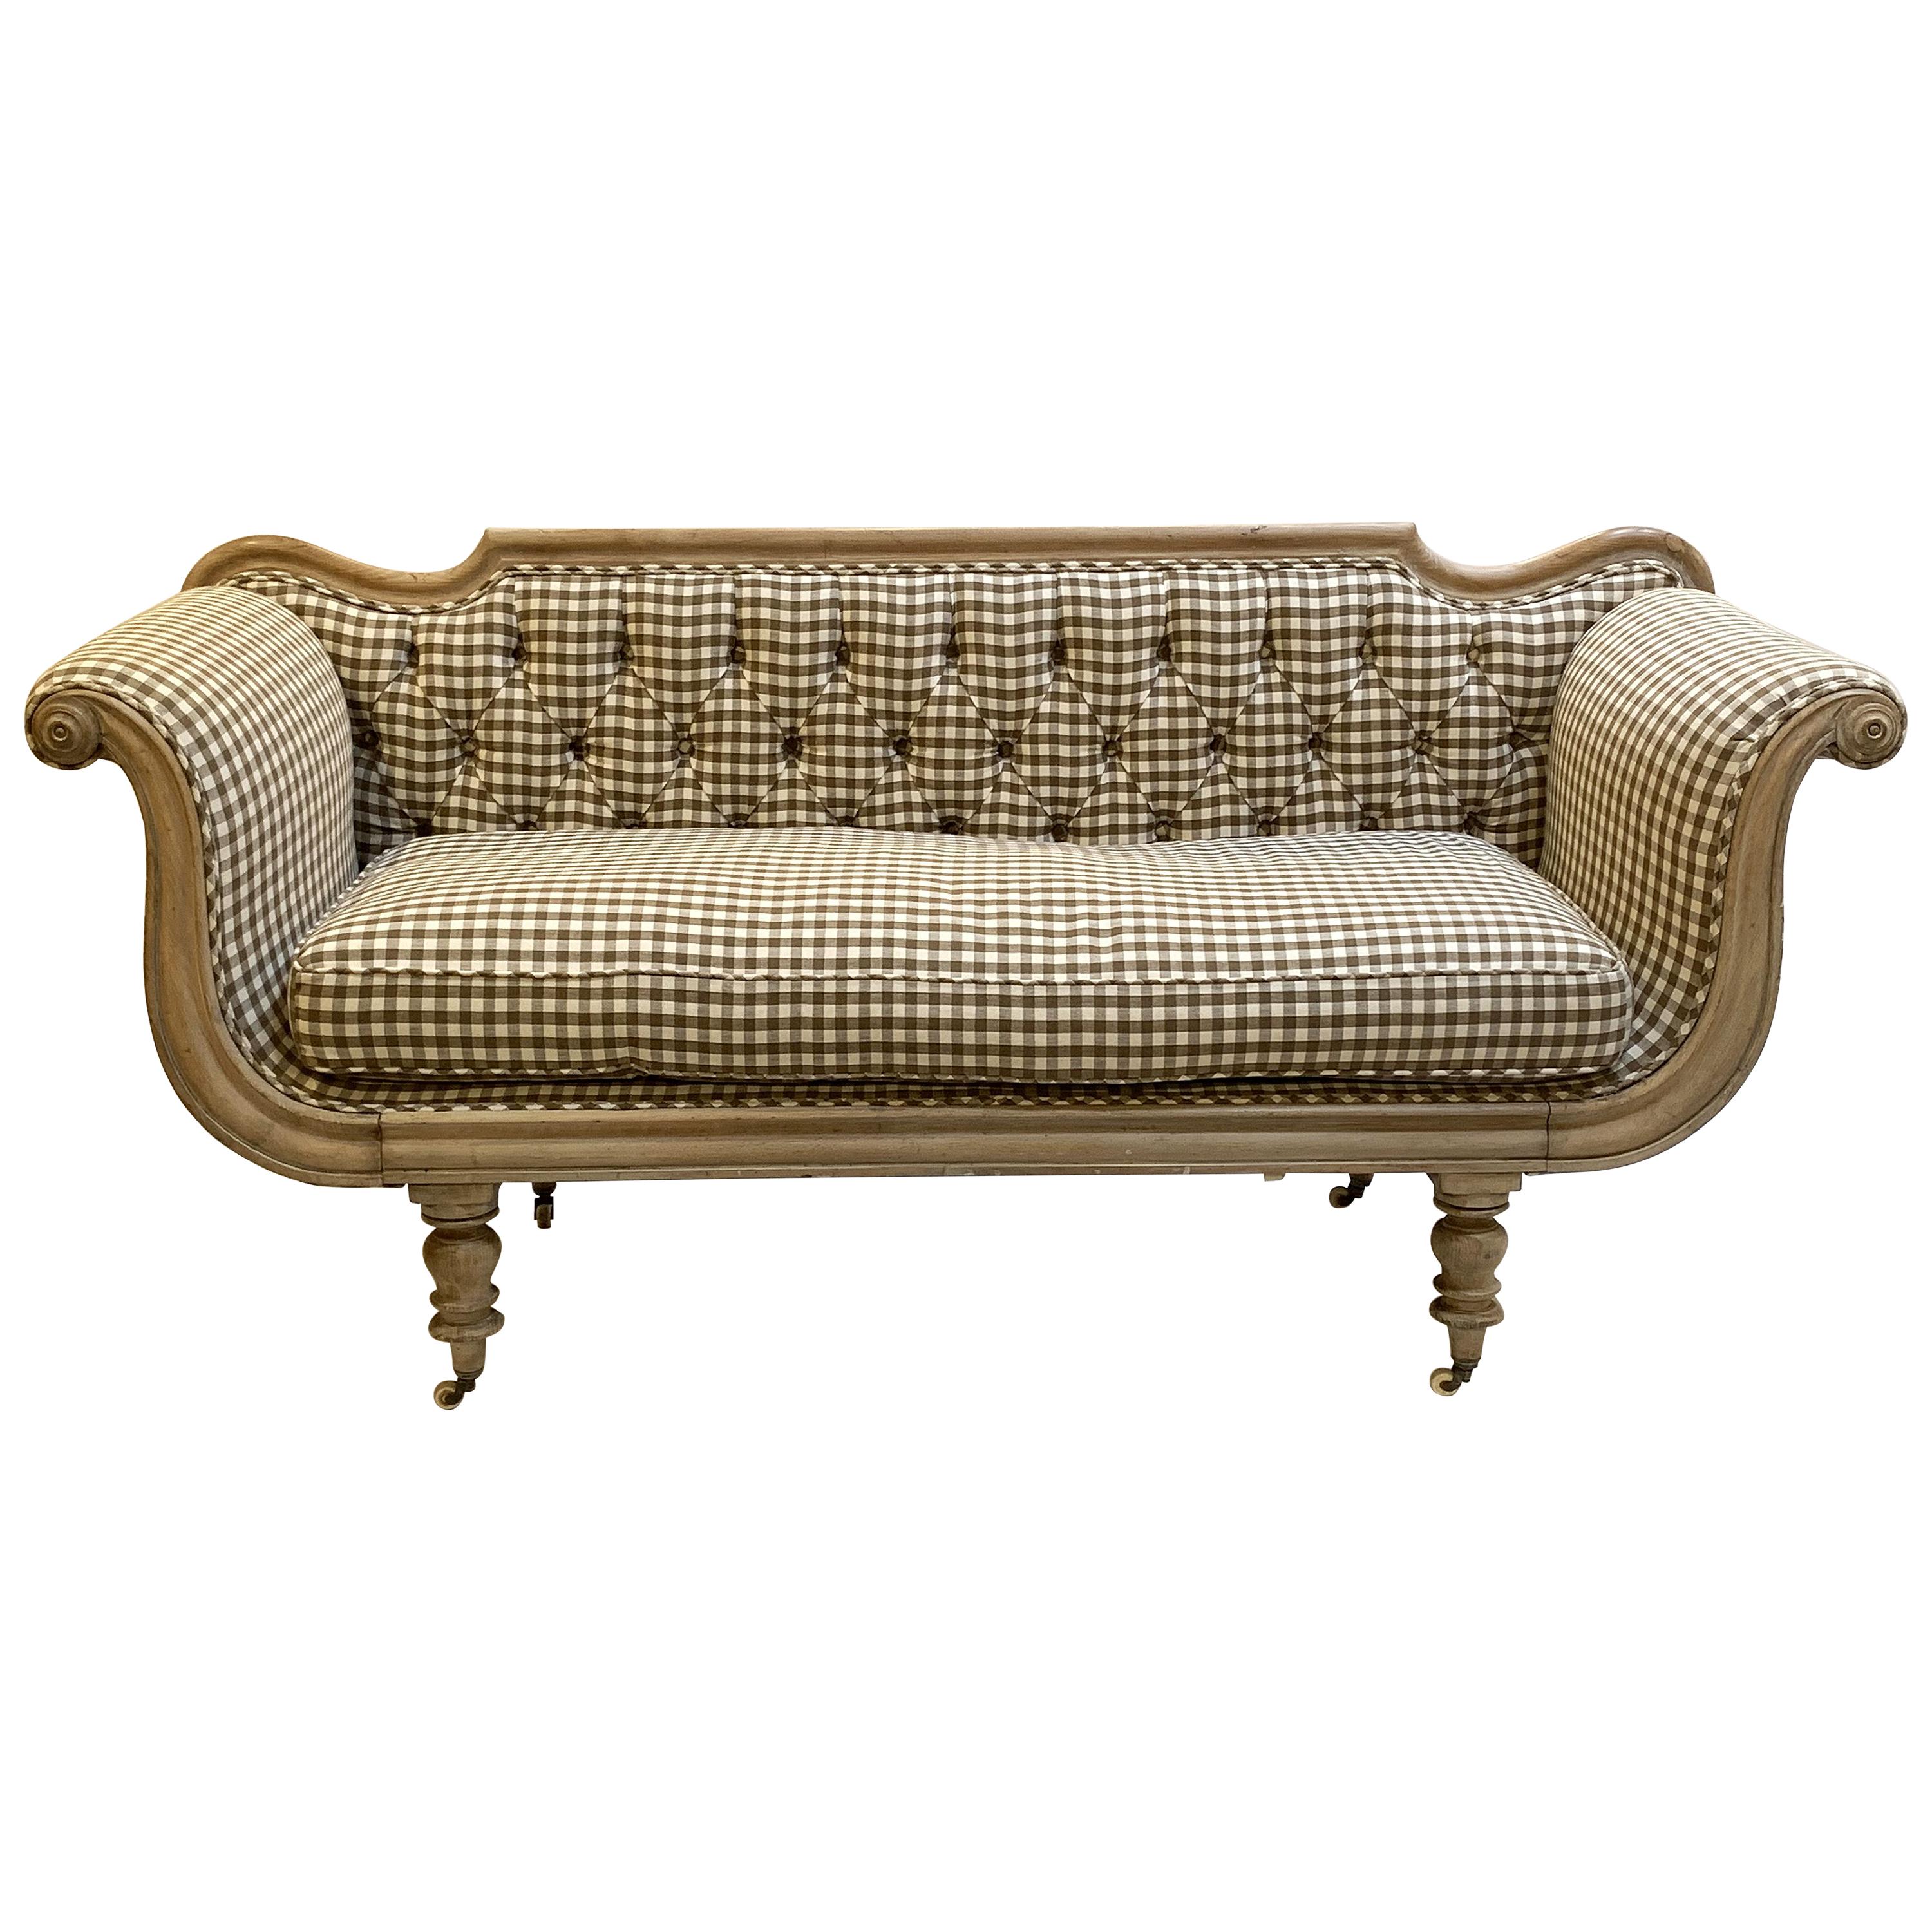 Swedish Regency Sofa with Upholstered Seating